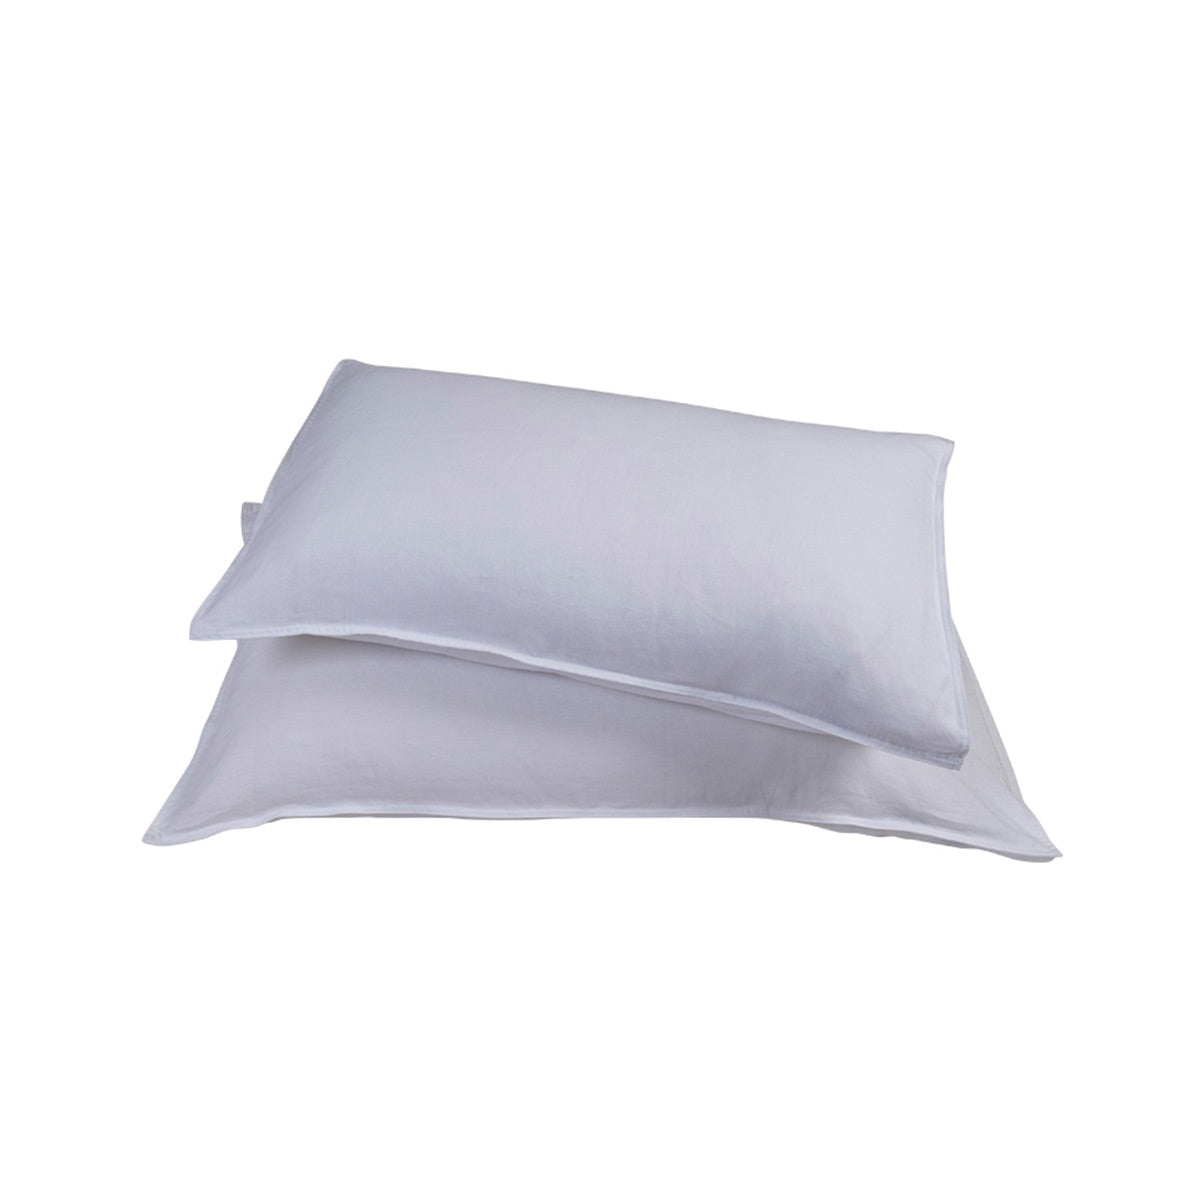 Standard Pillowcase set- Set of 2